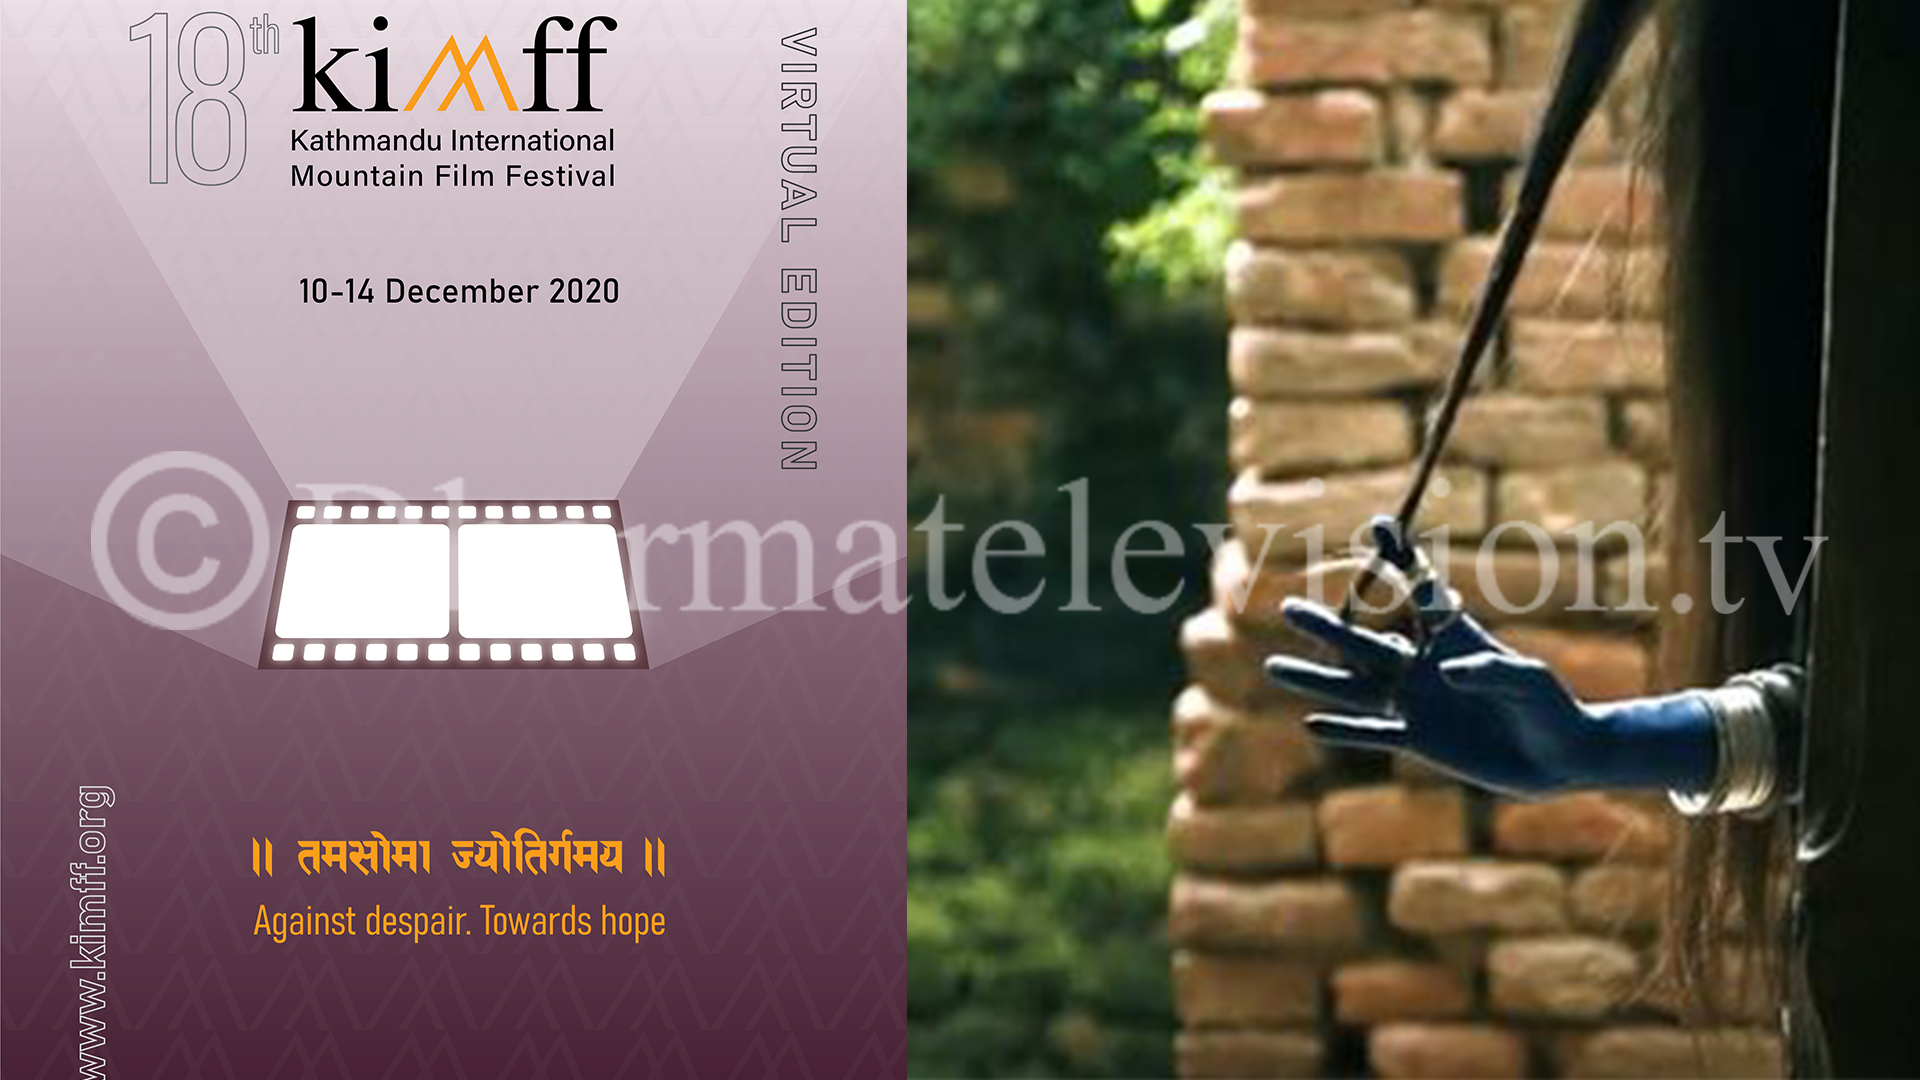 Kathmandu International Film Festival (KIMFF) to showcase films virtually